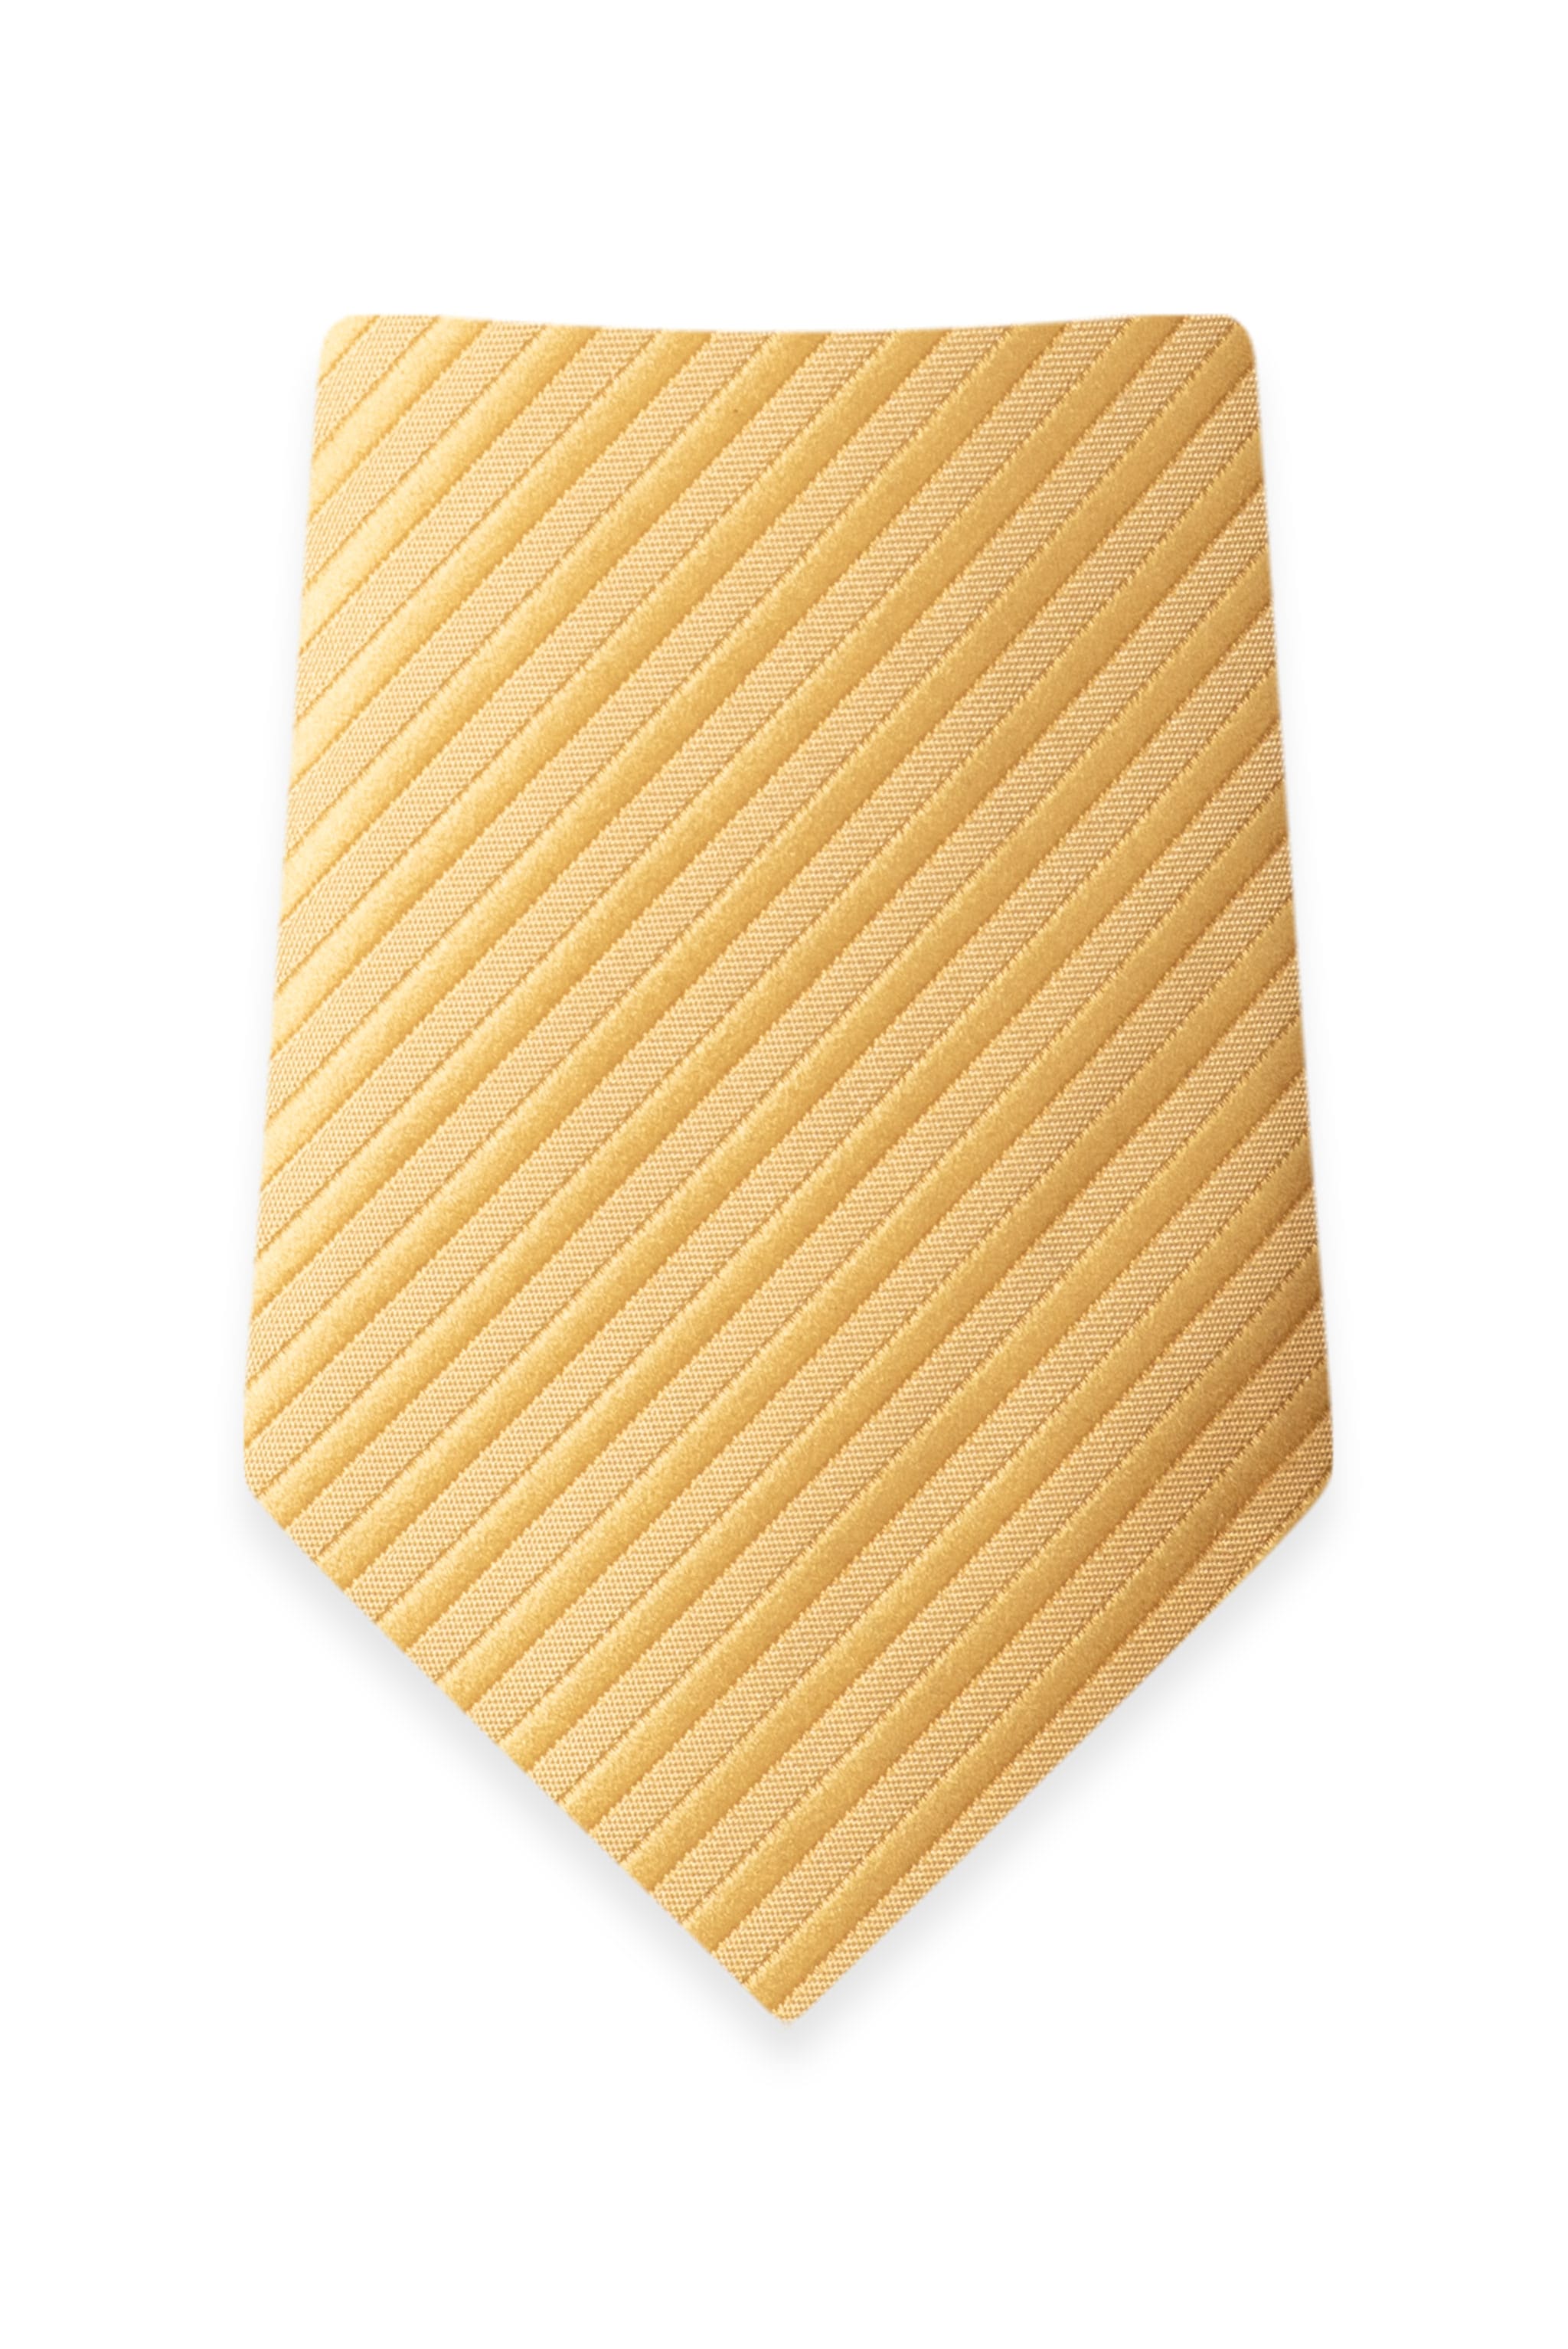 Striped Gold Self-Tie Windsor Tie